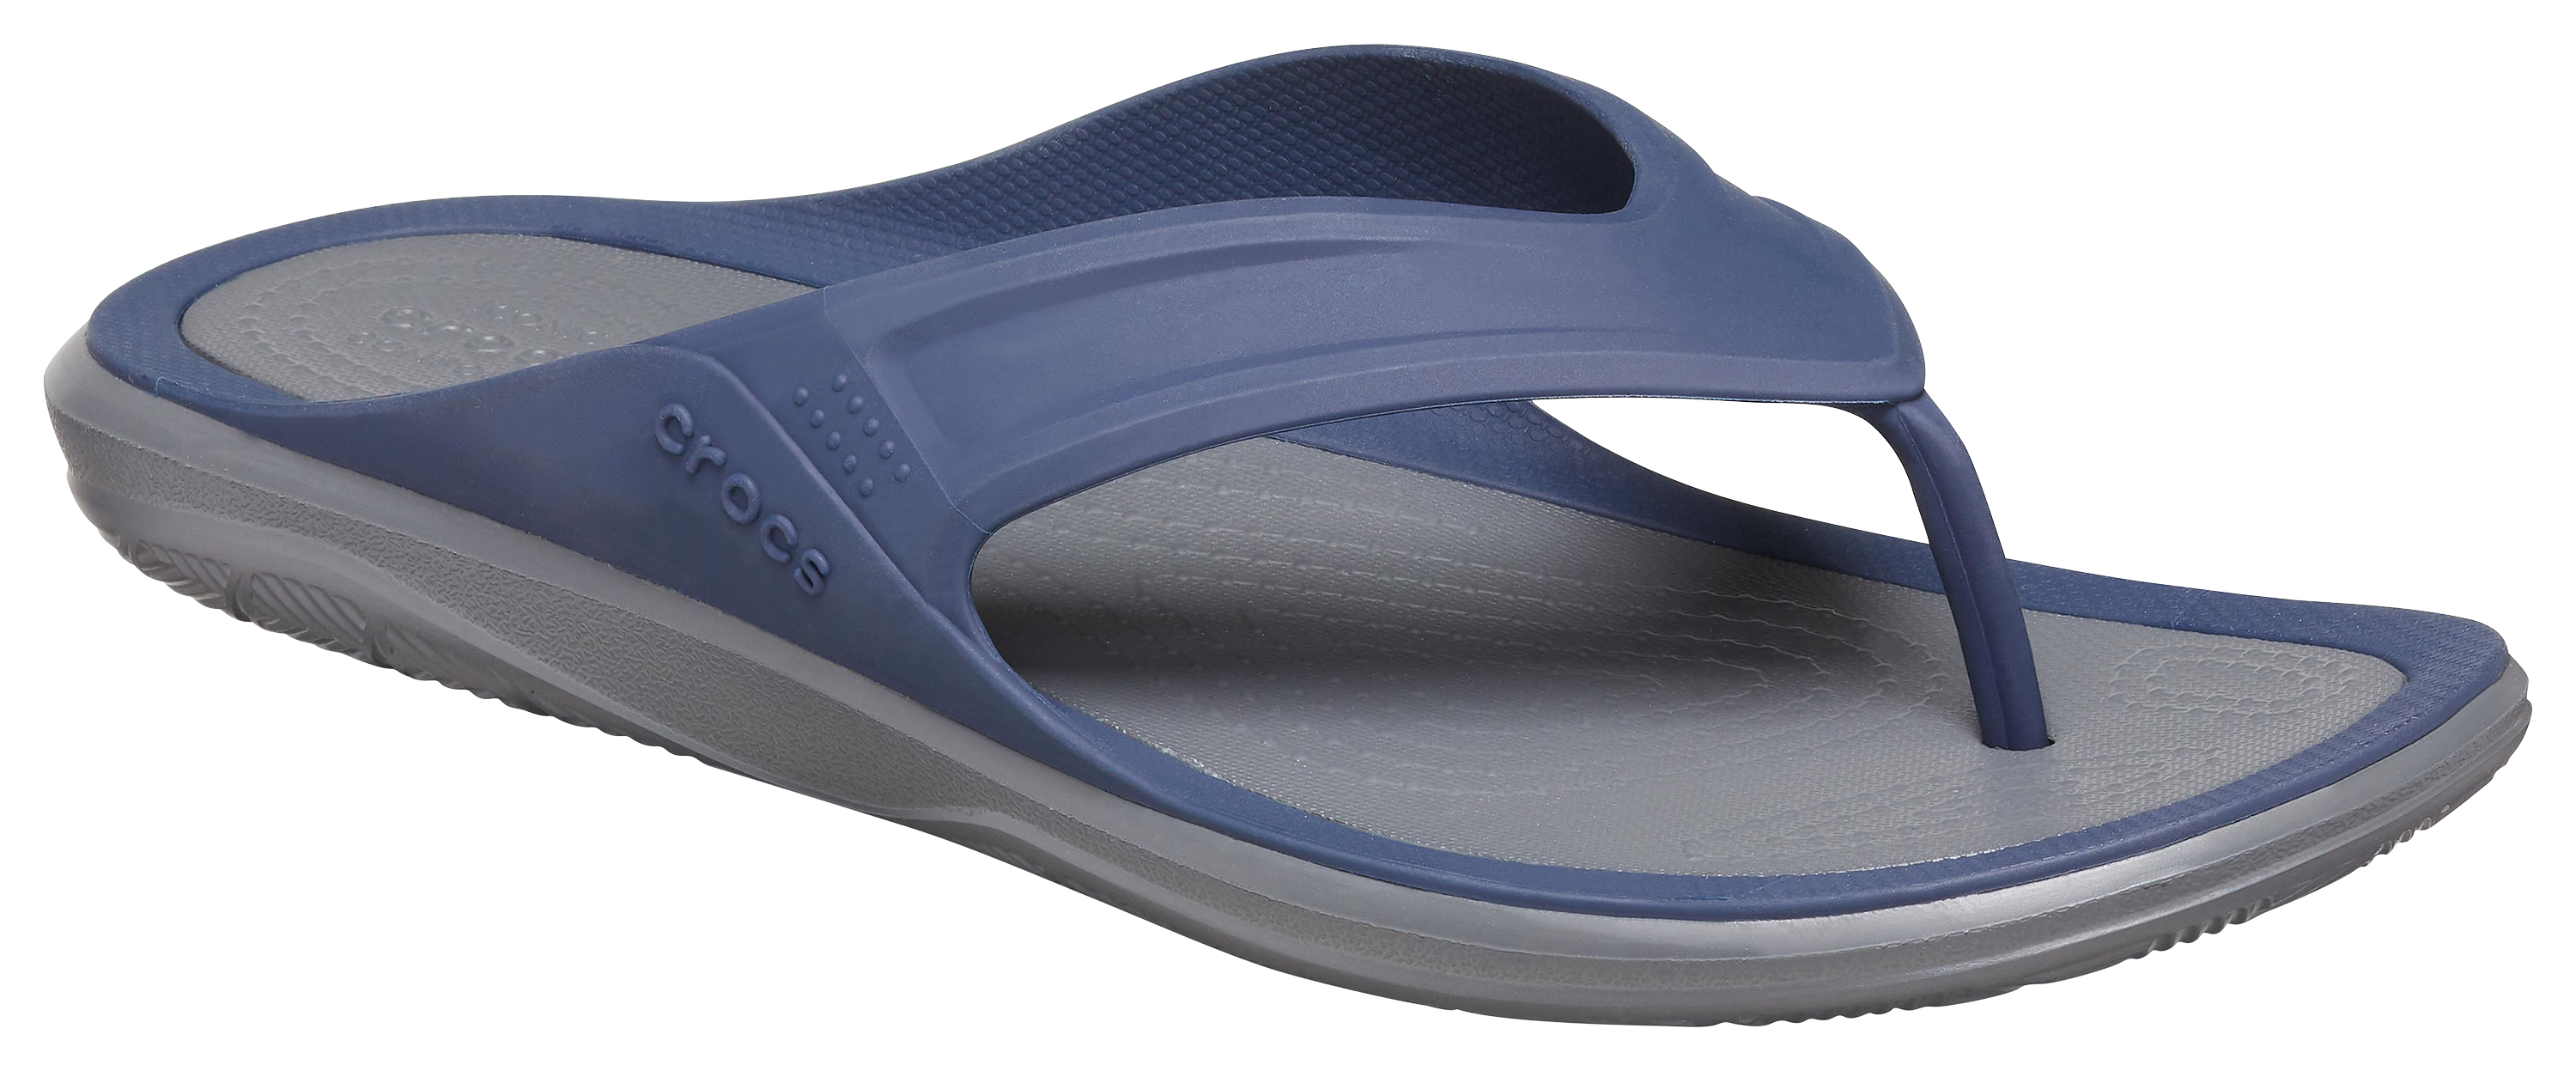 Crocs Swiftwater Wave Flip Thong Sandals for Men - Navy/Slate Grey - 12M